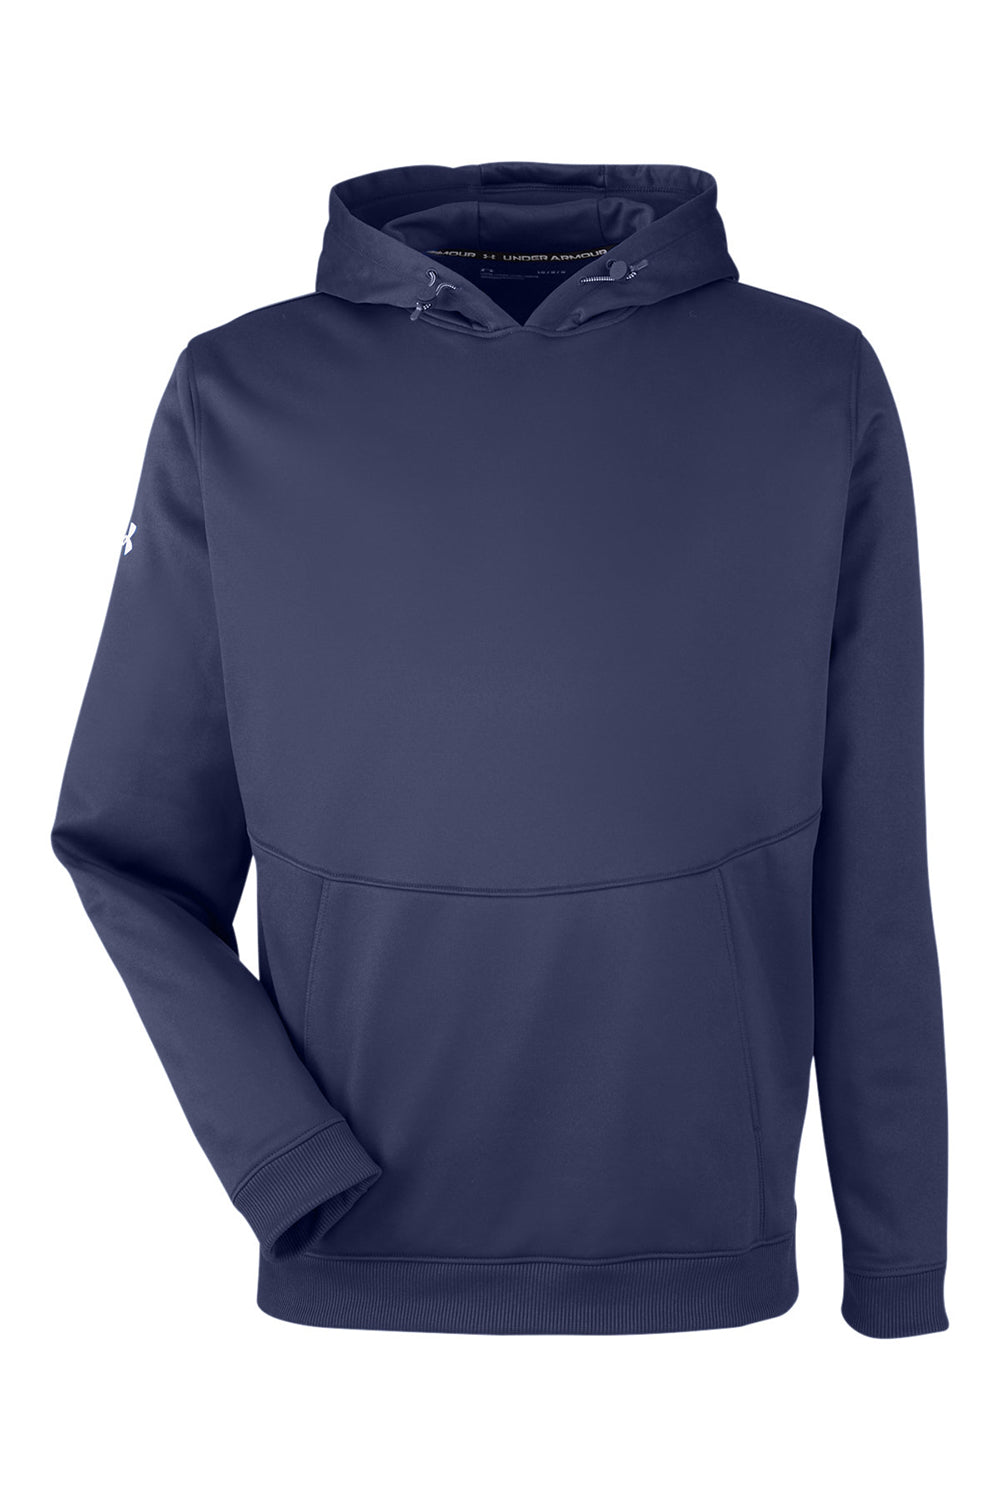 Under Armour 1370379 Mens Storm Armourfleece Water Resistant Hooded Sweatshirt Hoodie Midnight Navy Blue Flat Front